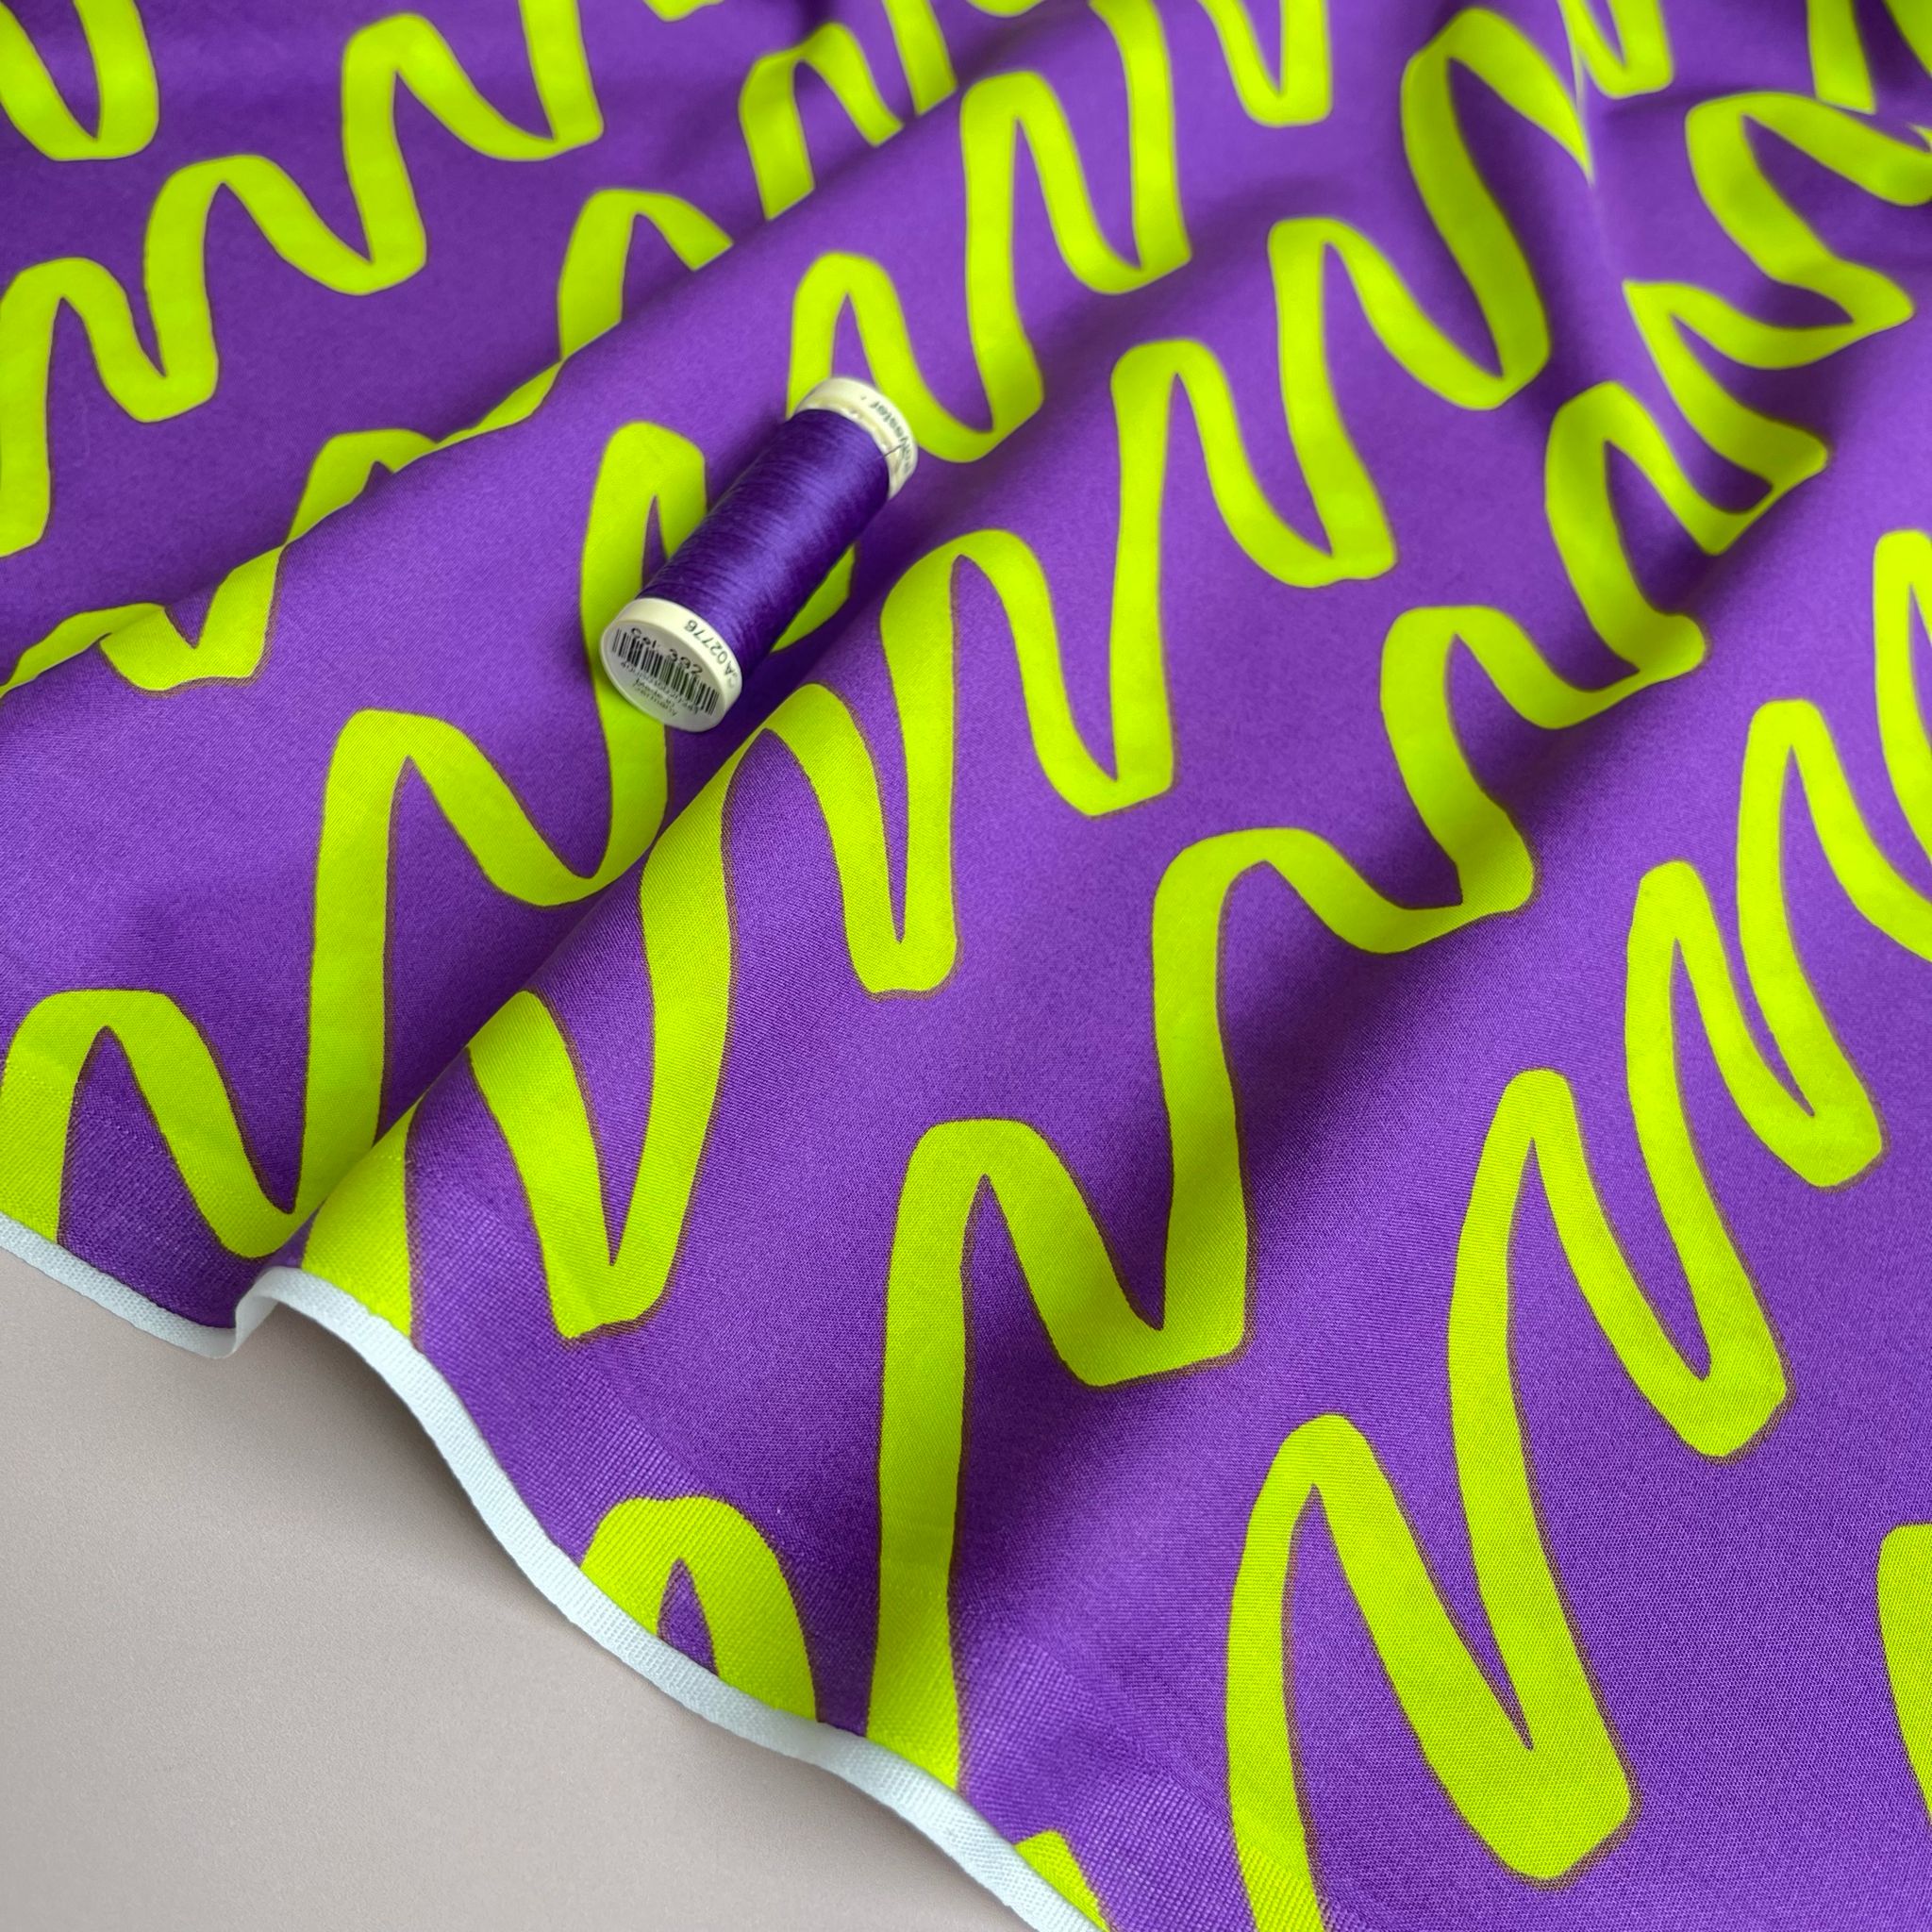 REMNANT 1.75 Metres - Nerida Hansen - Making Waves on Purple Cotton Poplin Fabric